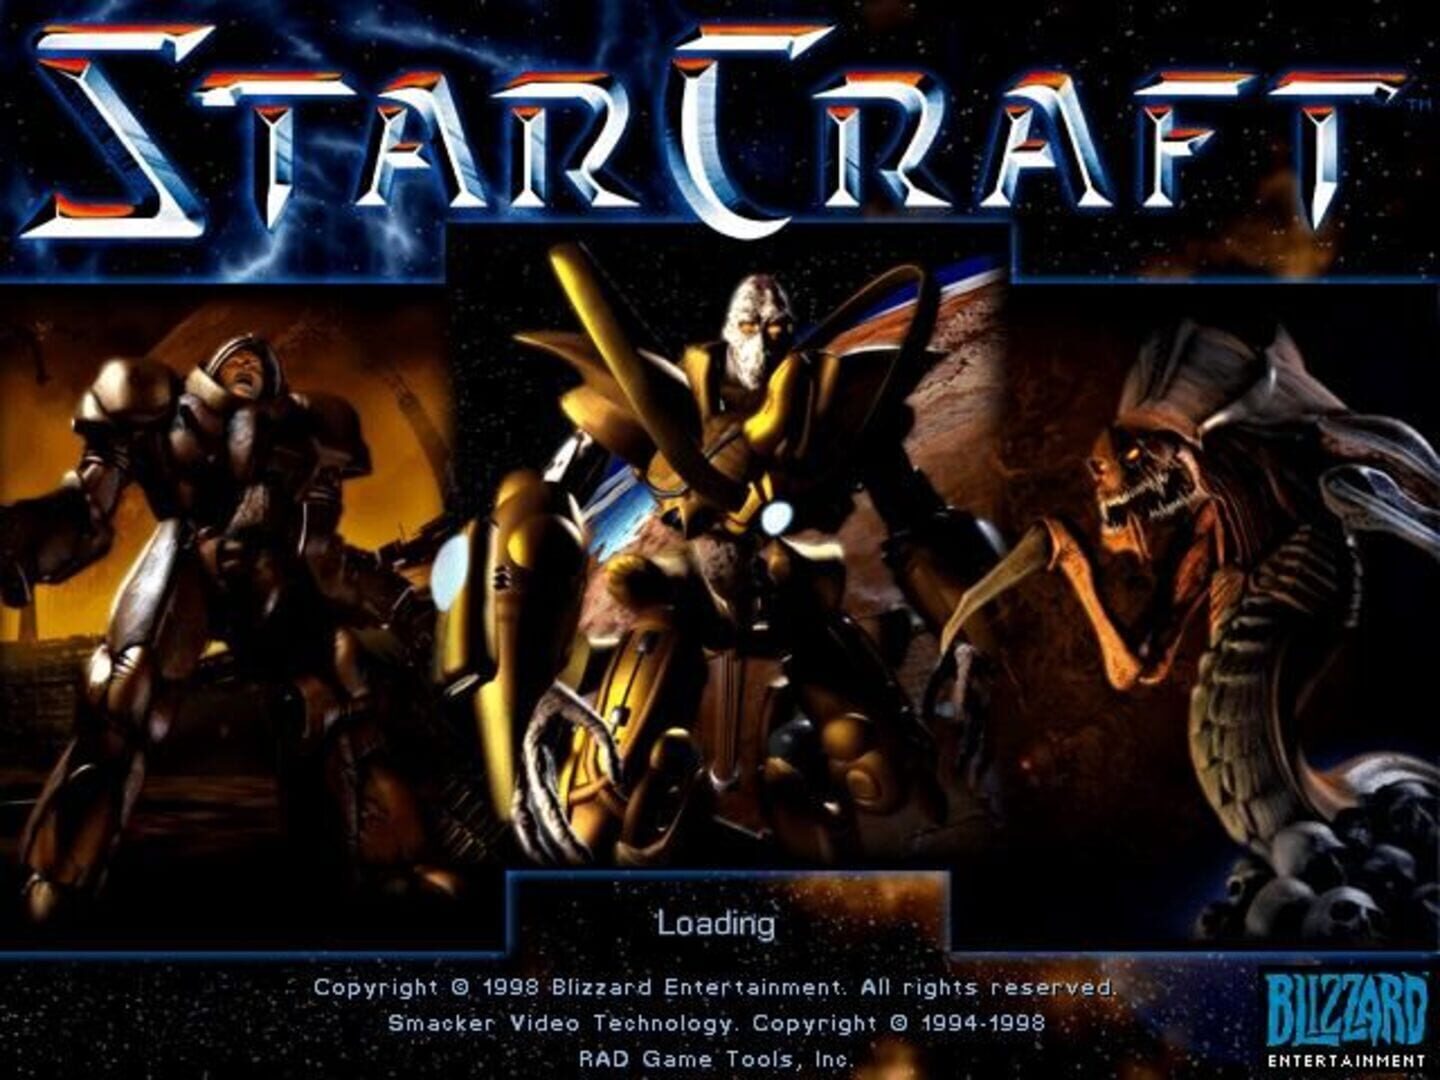 redeem original starcraft cd key on battle net